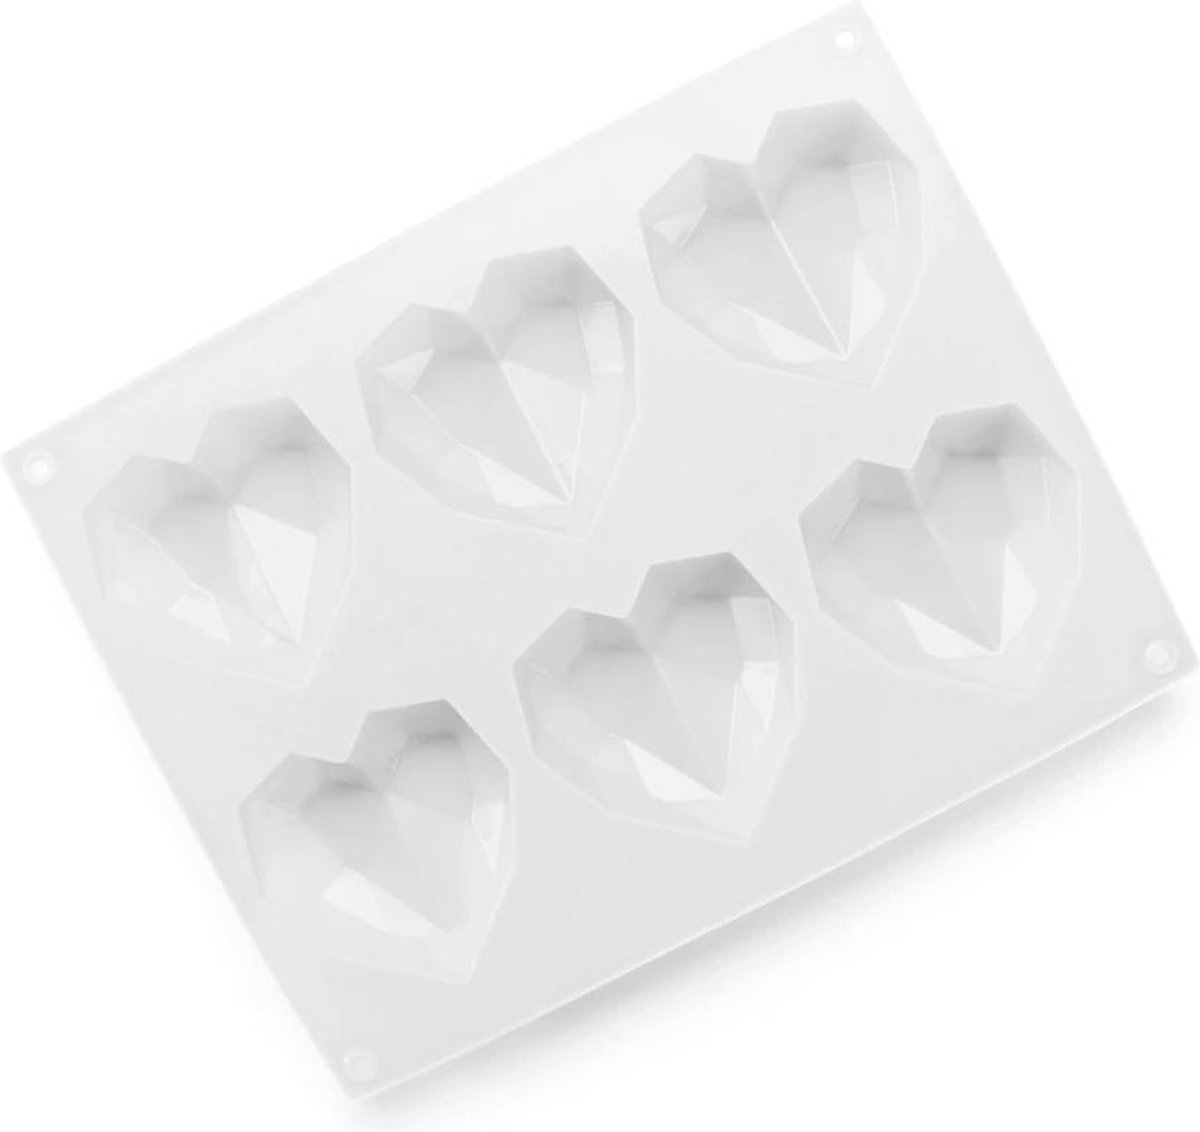 Cabantis Hart bakvorm|Siliconen bakvormen|Siliconen mallen|Bak spullen|Cake vorm|Chocolade cadeau|Chocolade hart|Wit